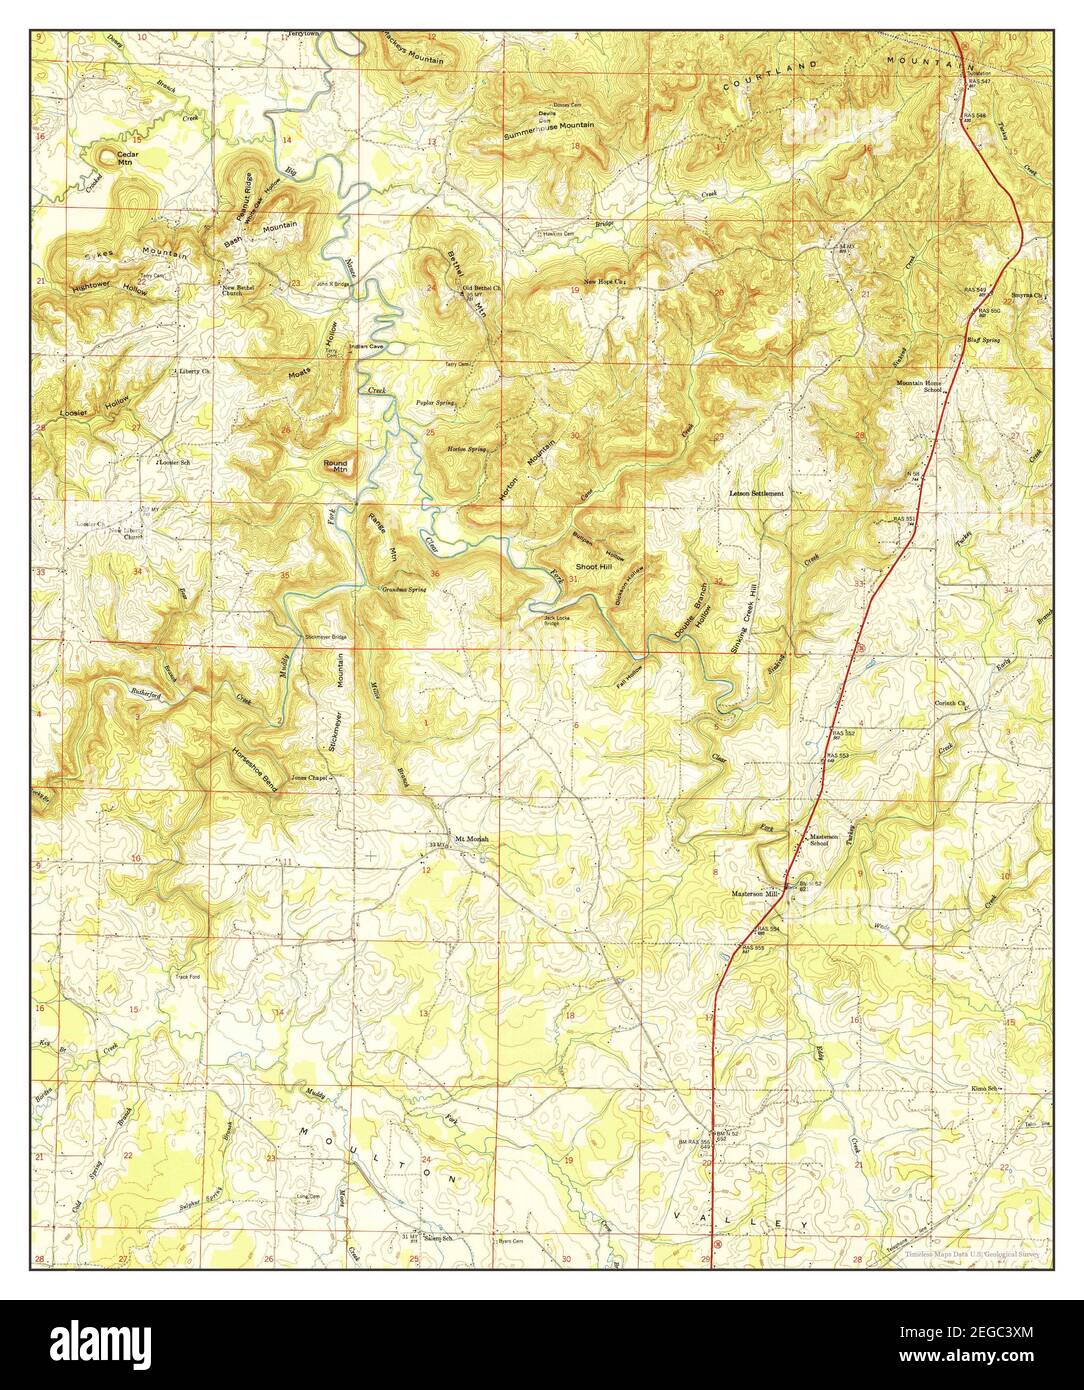 Masterson, Alabama, map 1951, 1:24000, United States of America by Timeless Maps, data U.S. Geological Survey Stock Photo